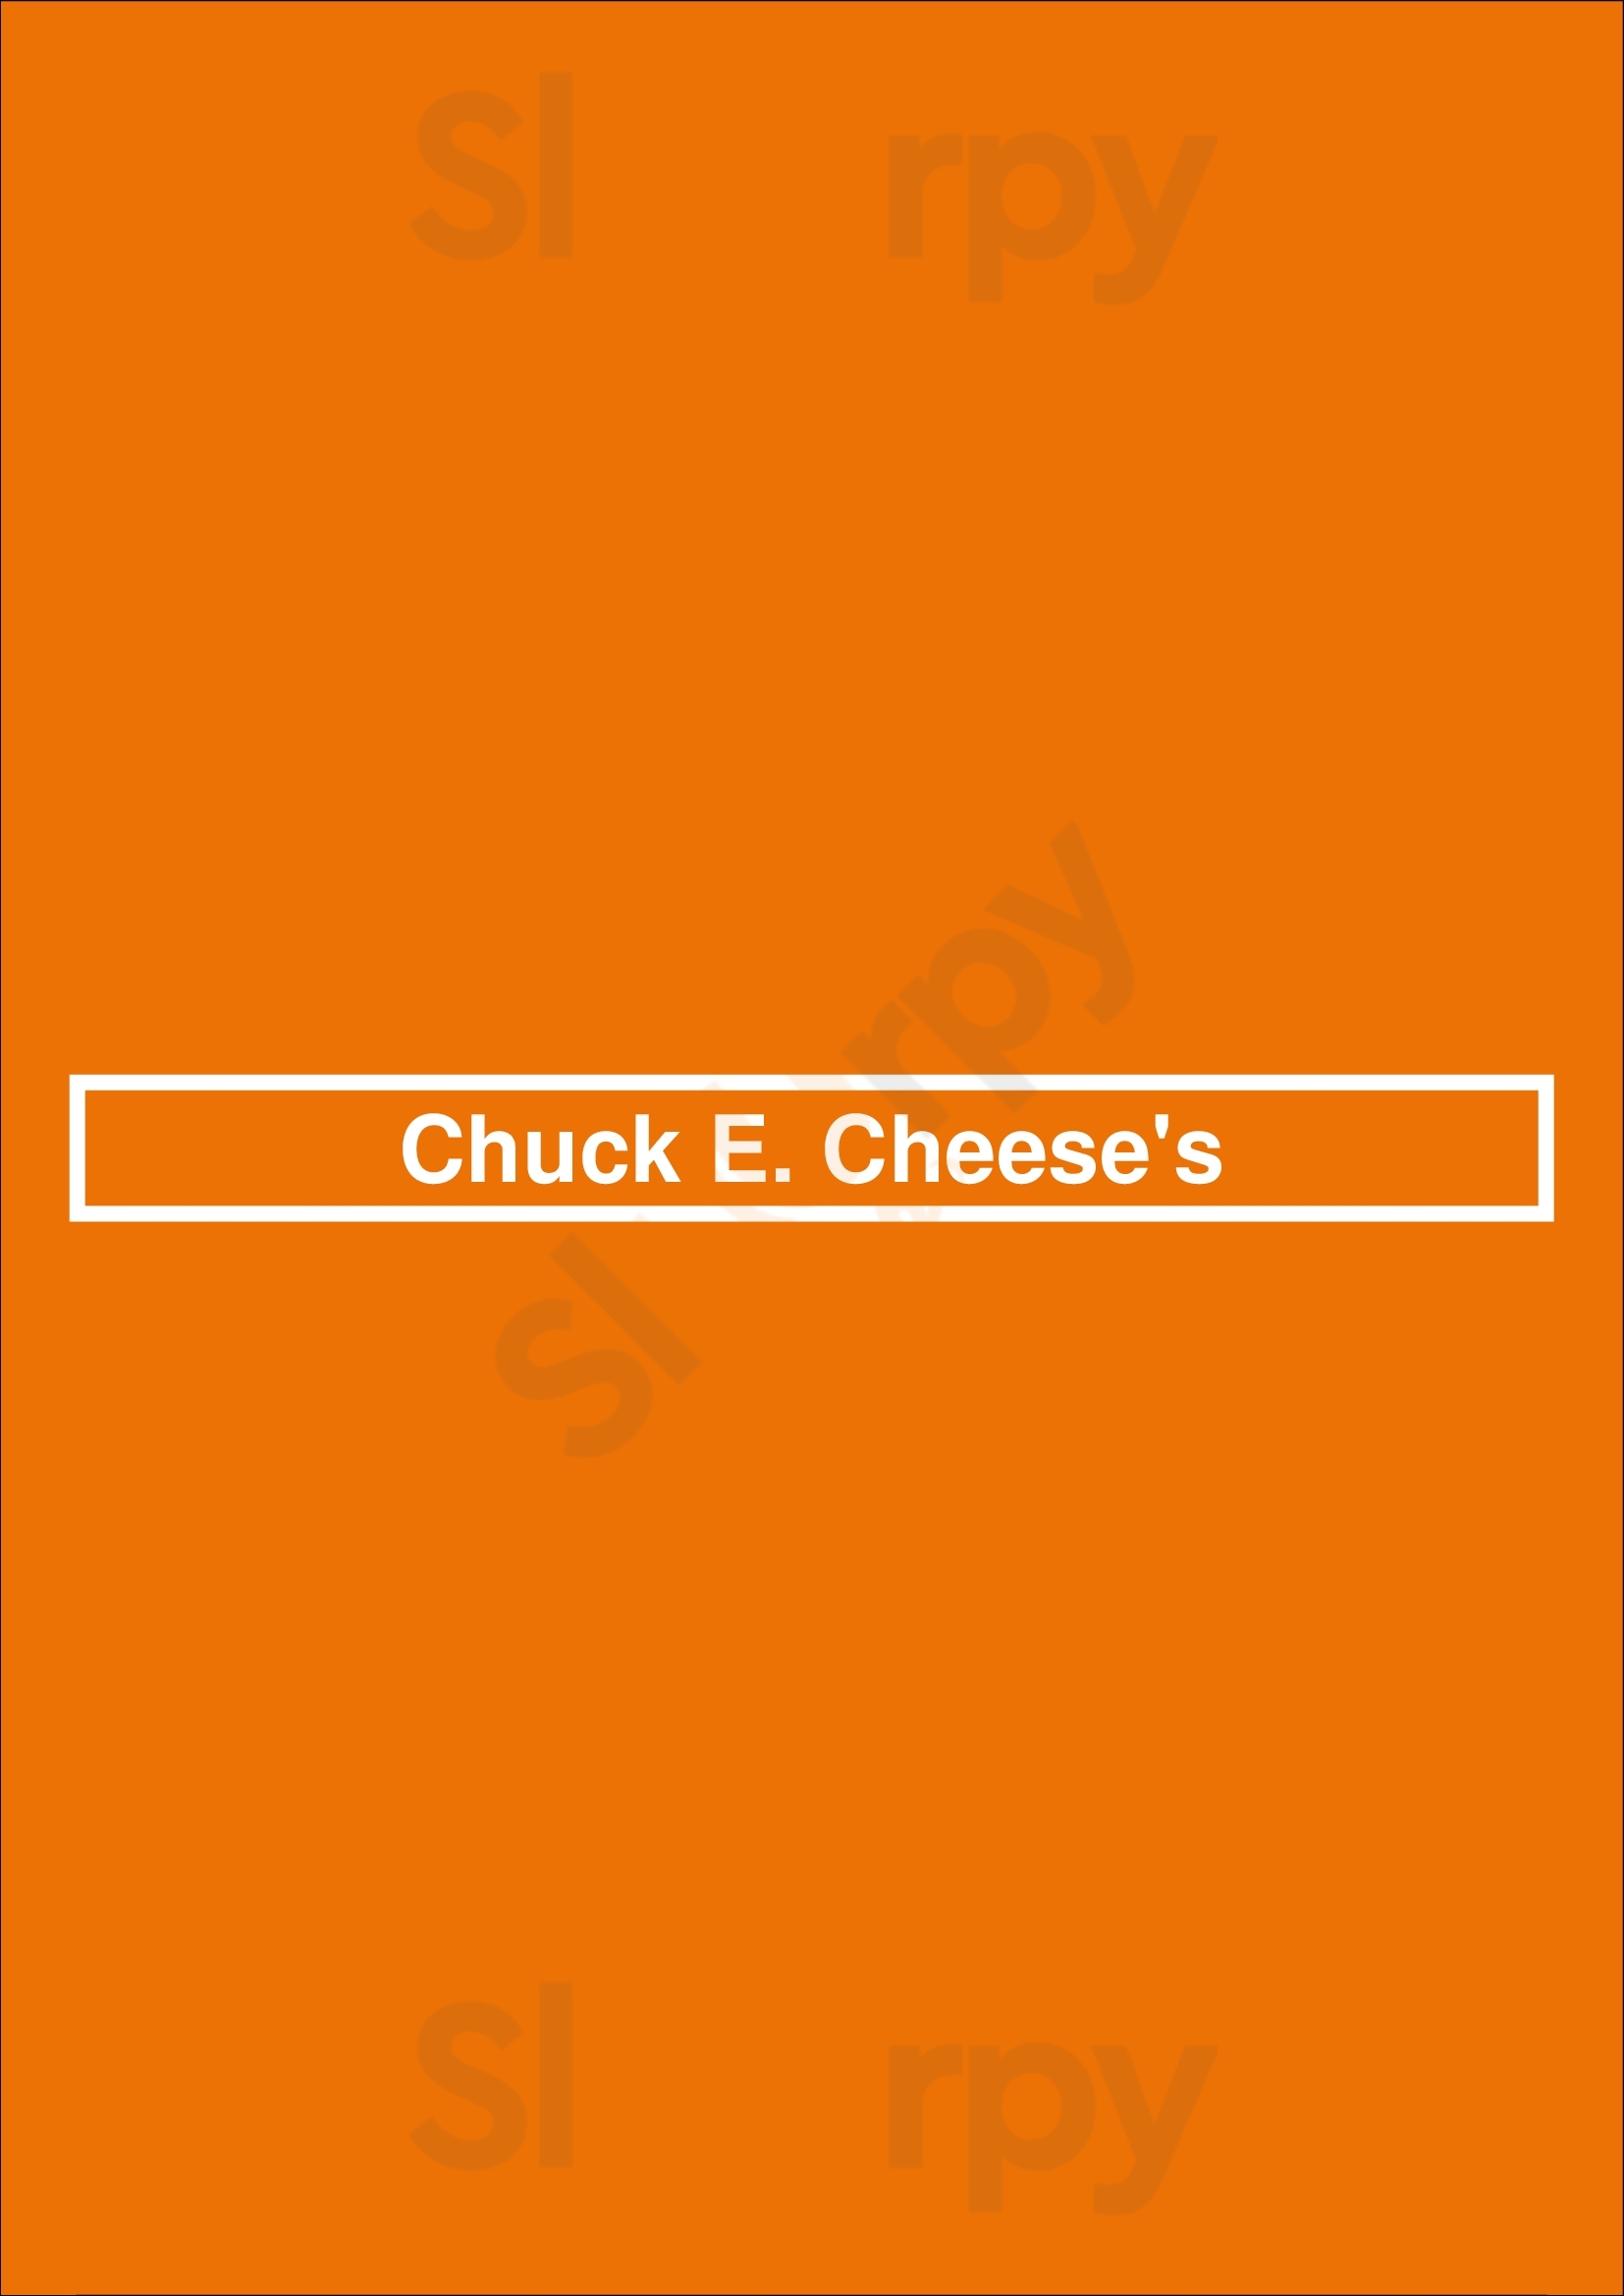 Chuck E. Cheese Fort Myers Menu - 1